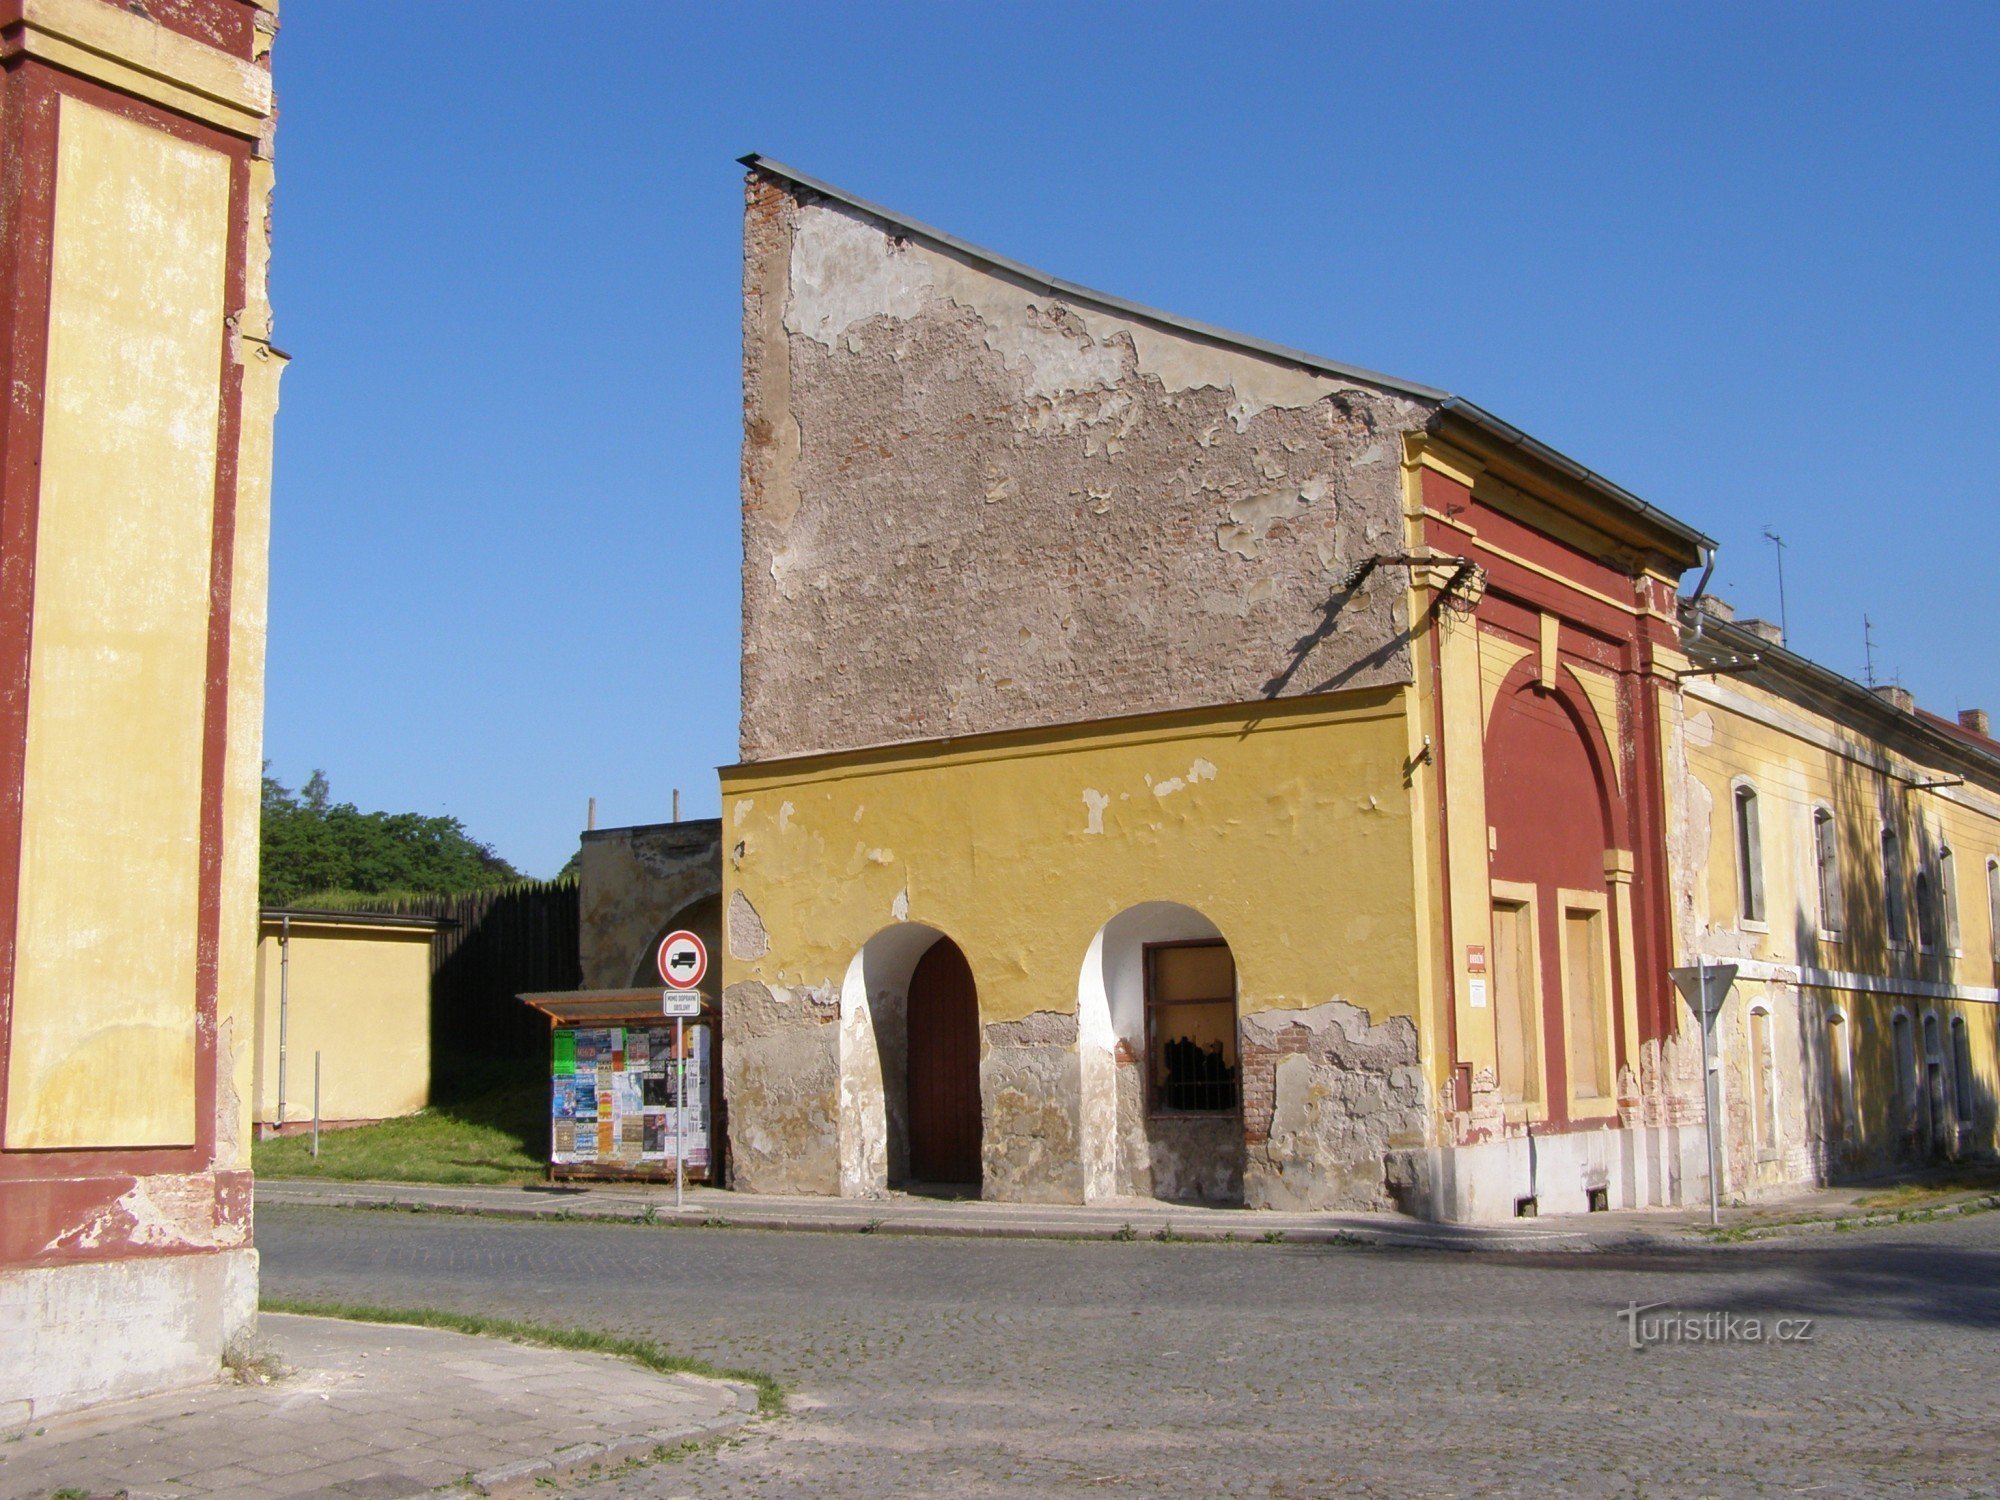 Josefov - Hradecká gate